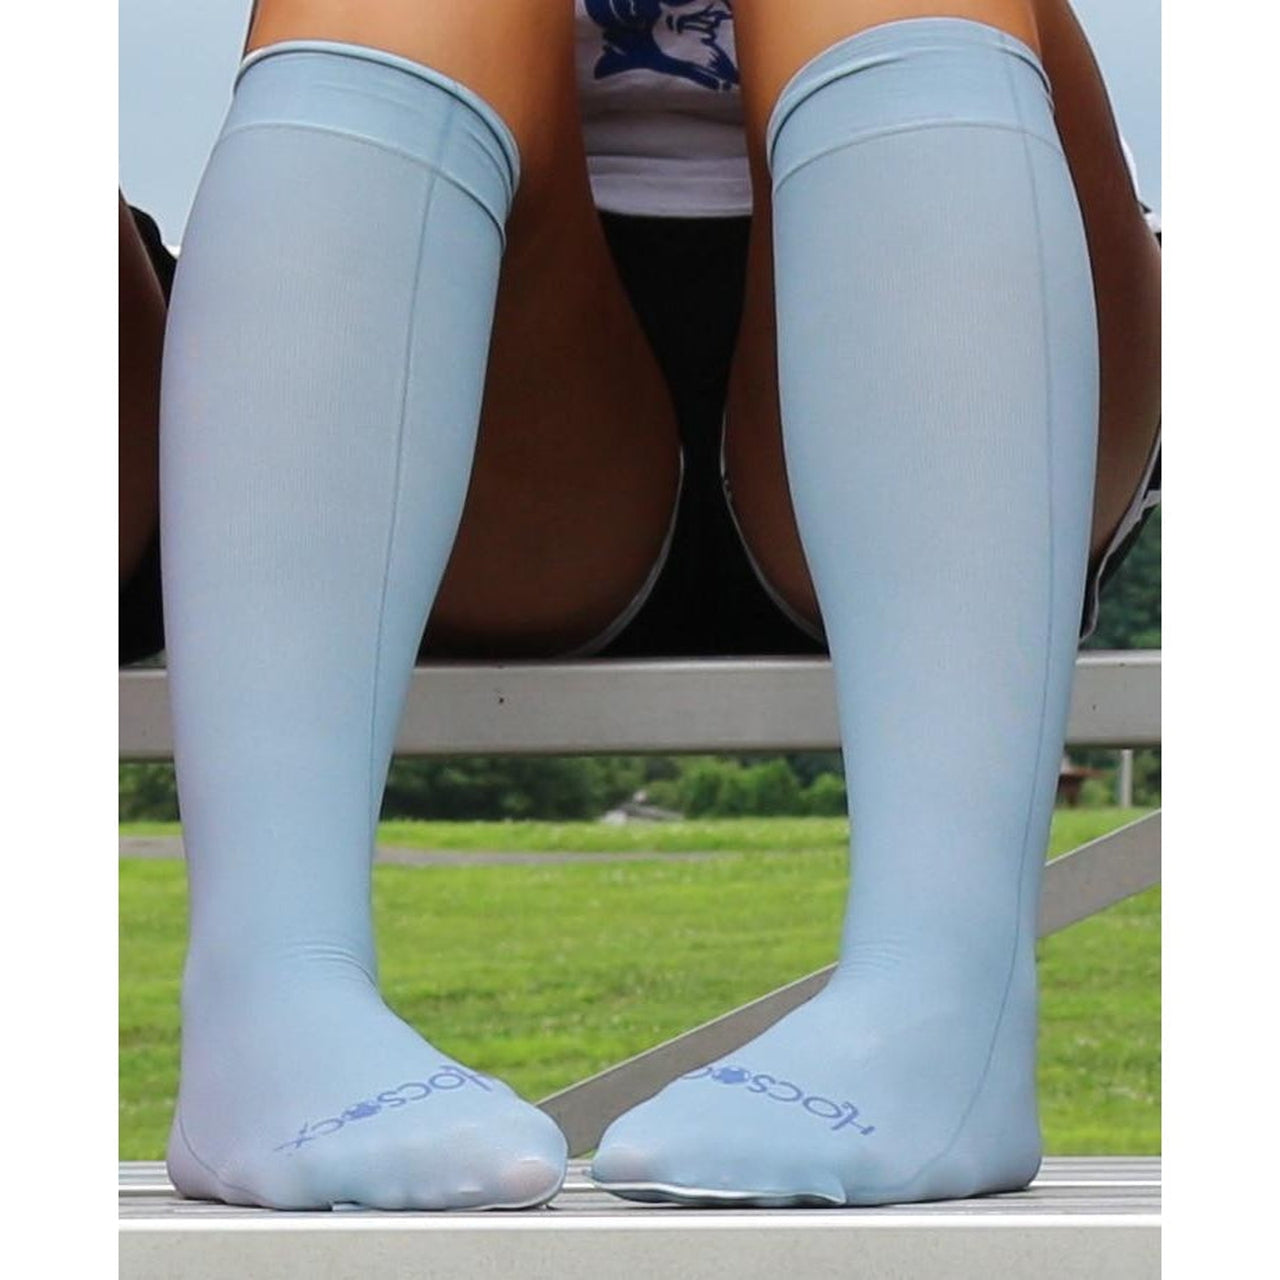 Hocsocx Gray Performance Shin Guard Rash Liner Sport Socks- Under Socks